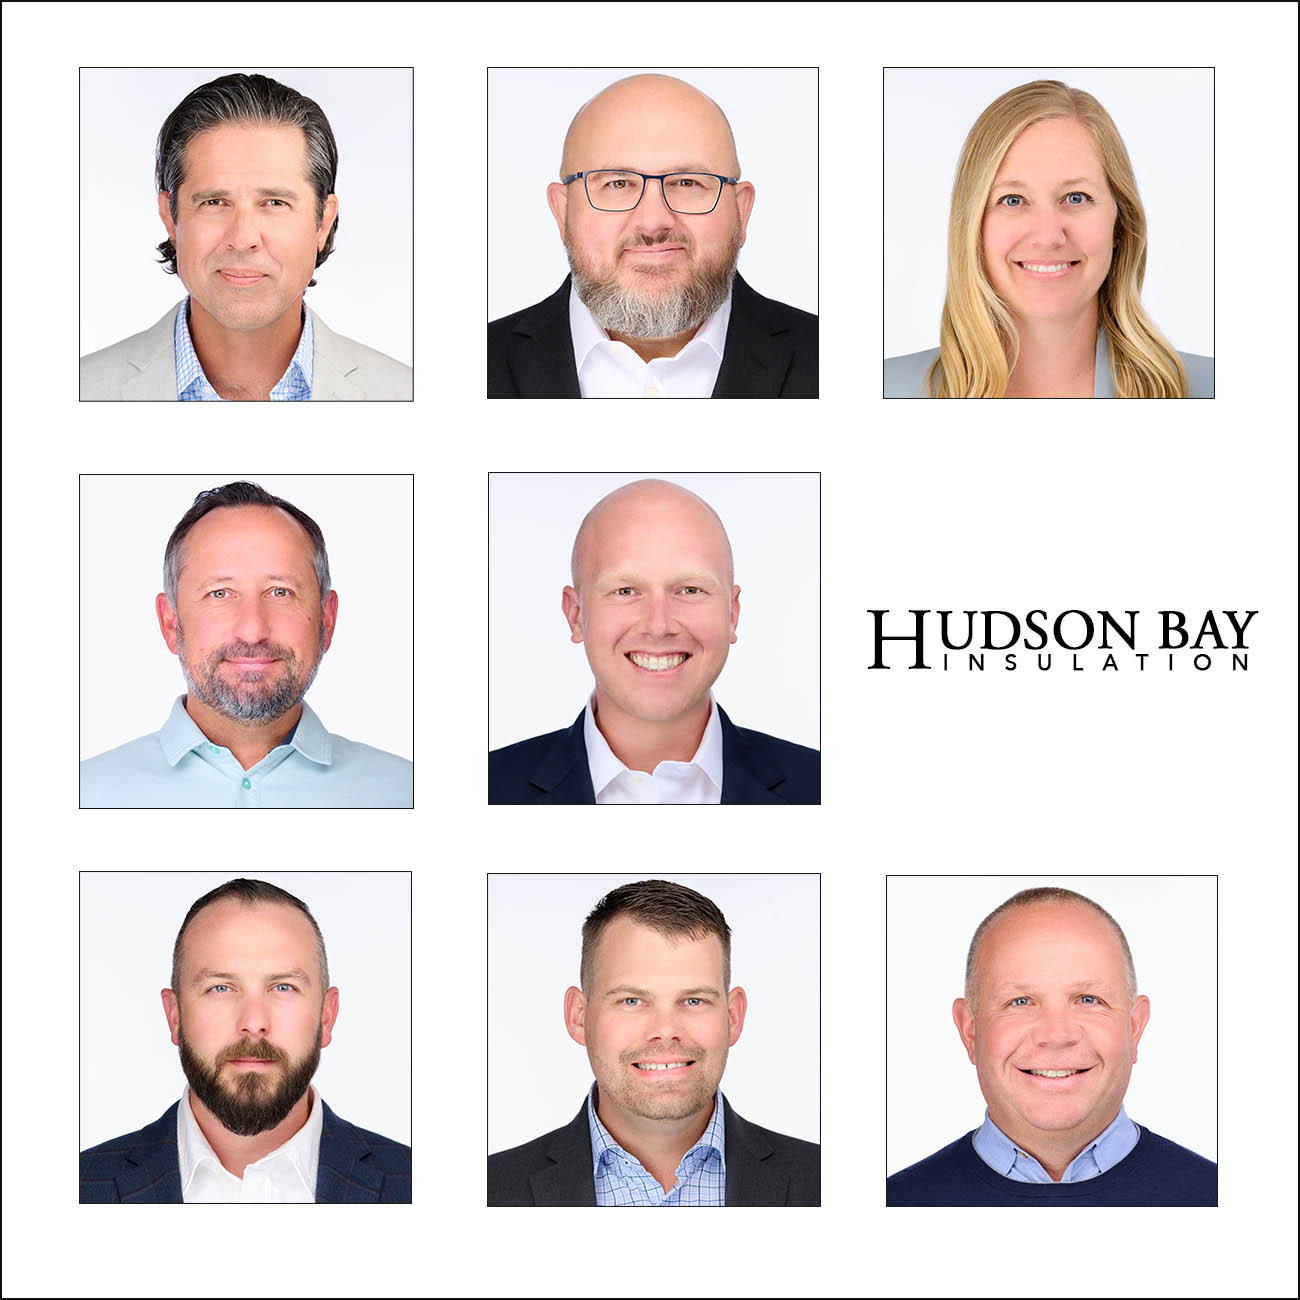 Corporate Headshots - Hudson Bay Insulation Team Photos